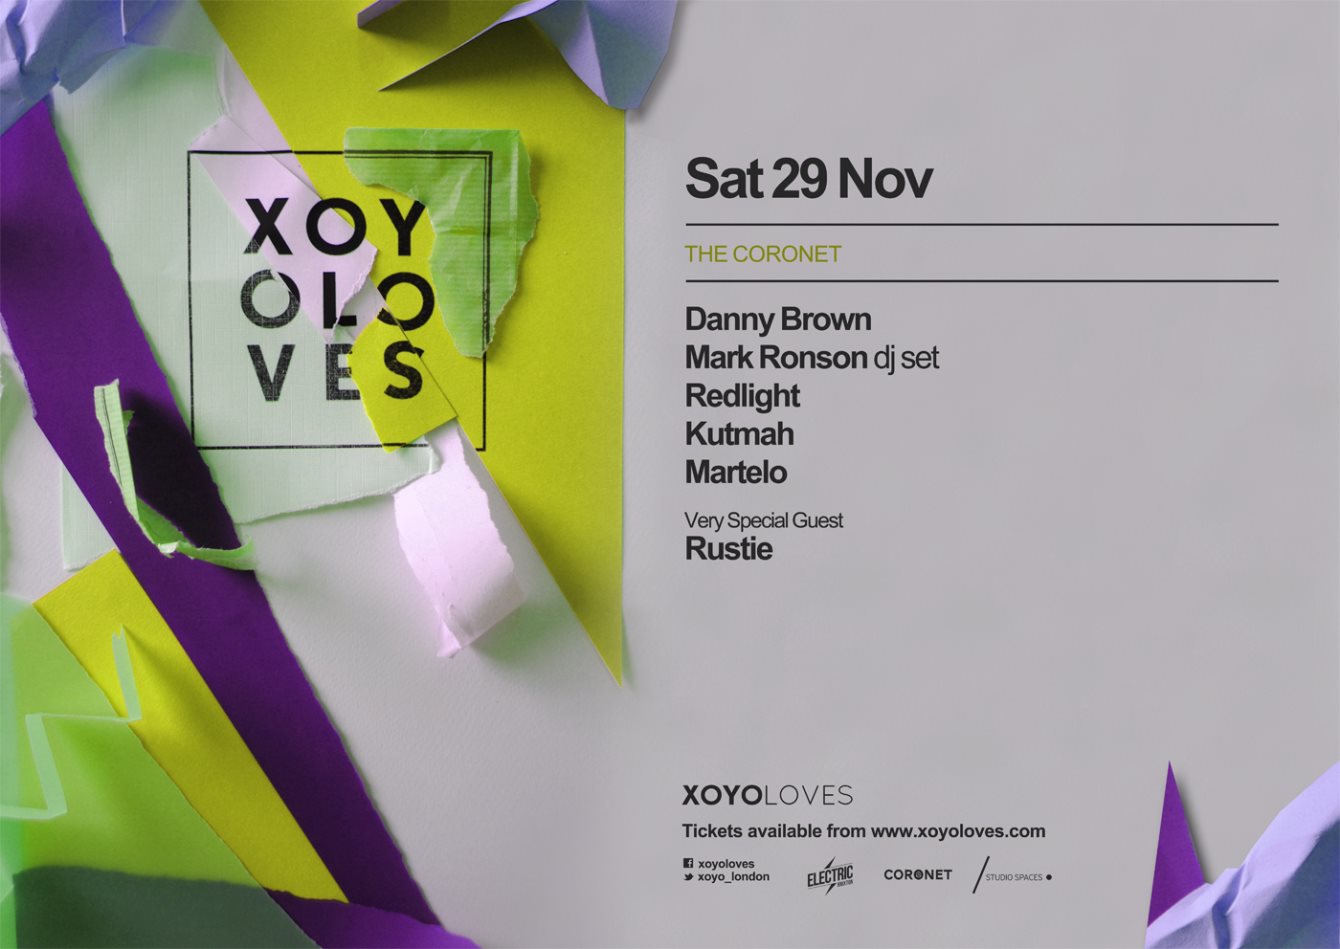 Xoyo Loves: Danny Brown, Mark Ronson (DJ set), Redlight, Kutmah & Very Special Guest Rustie